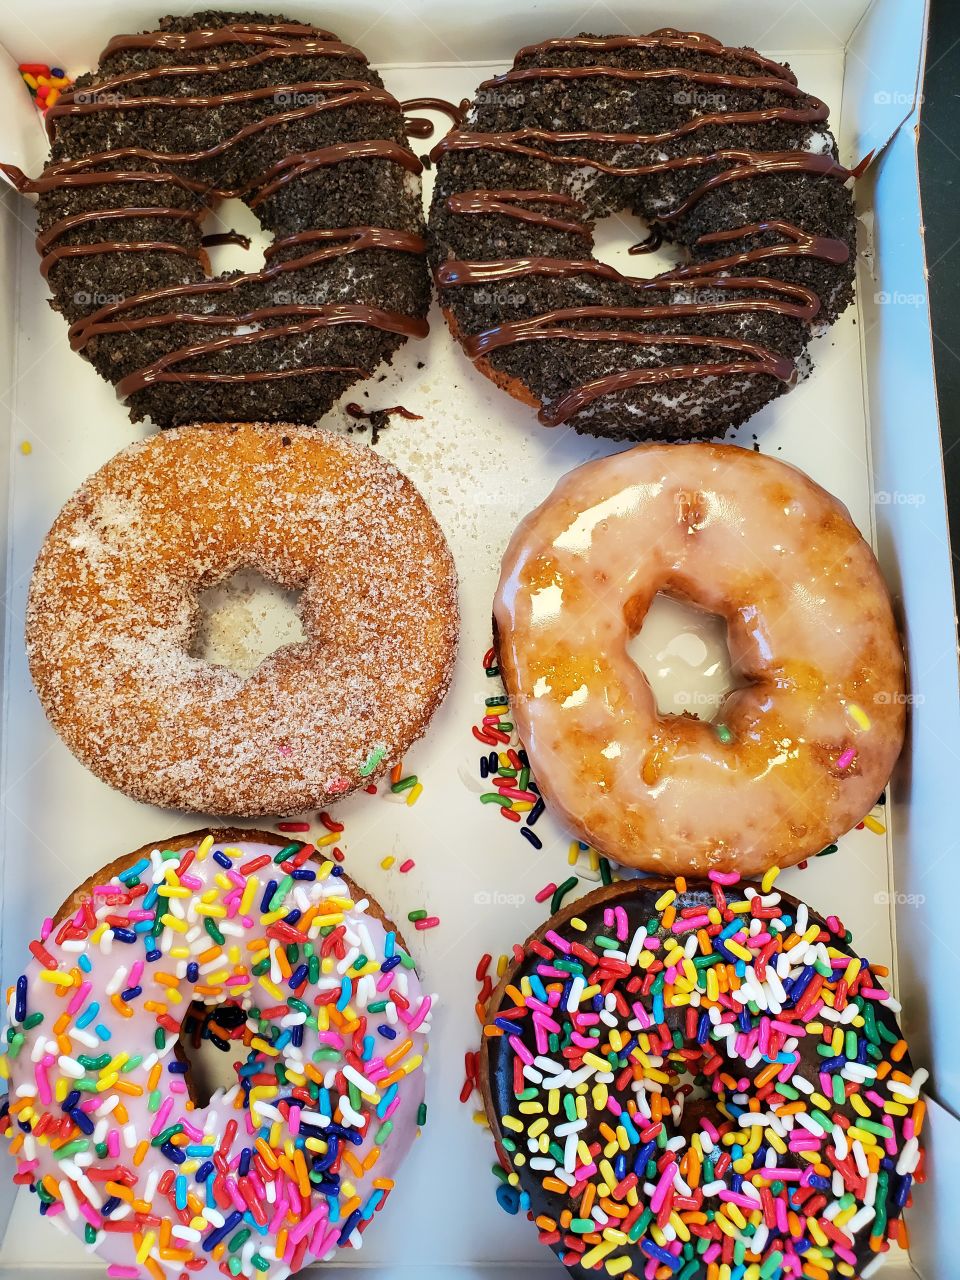 Assortment of half a dozen delicious donuts.